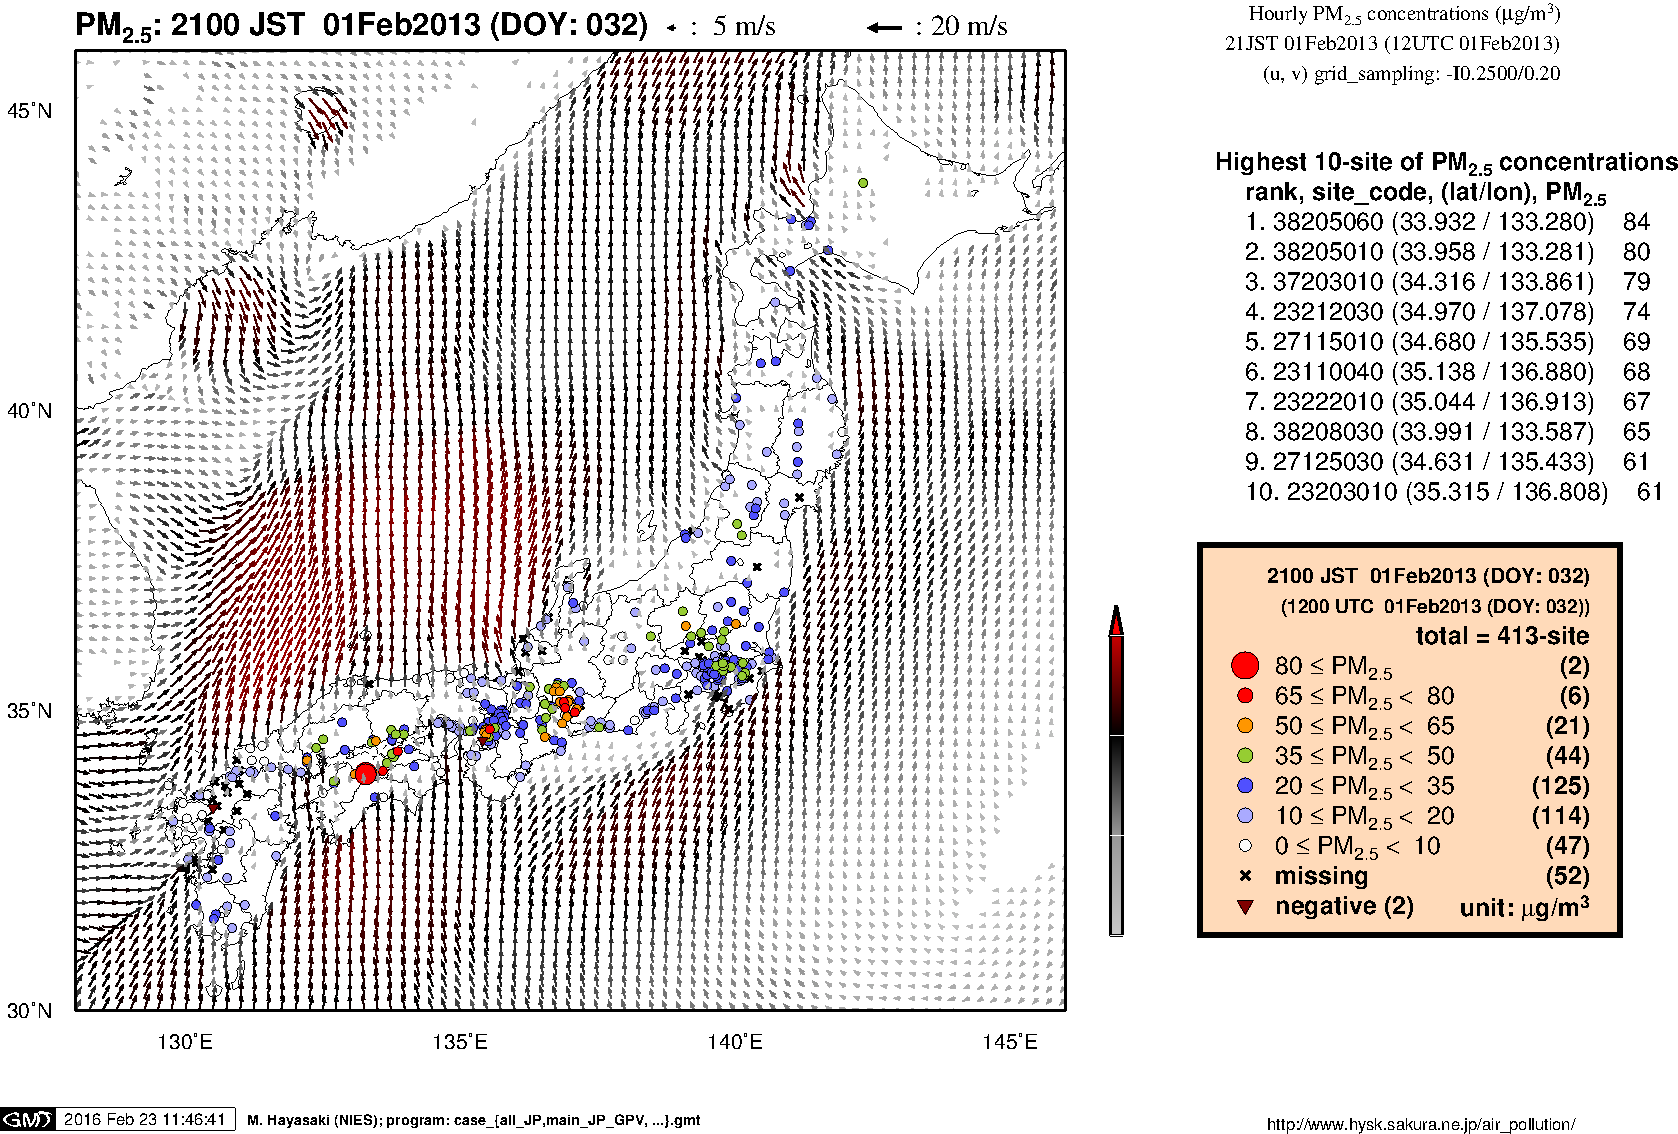 PM2.5 concentration in Japan (21JST 01Feb2013)